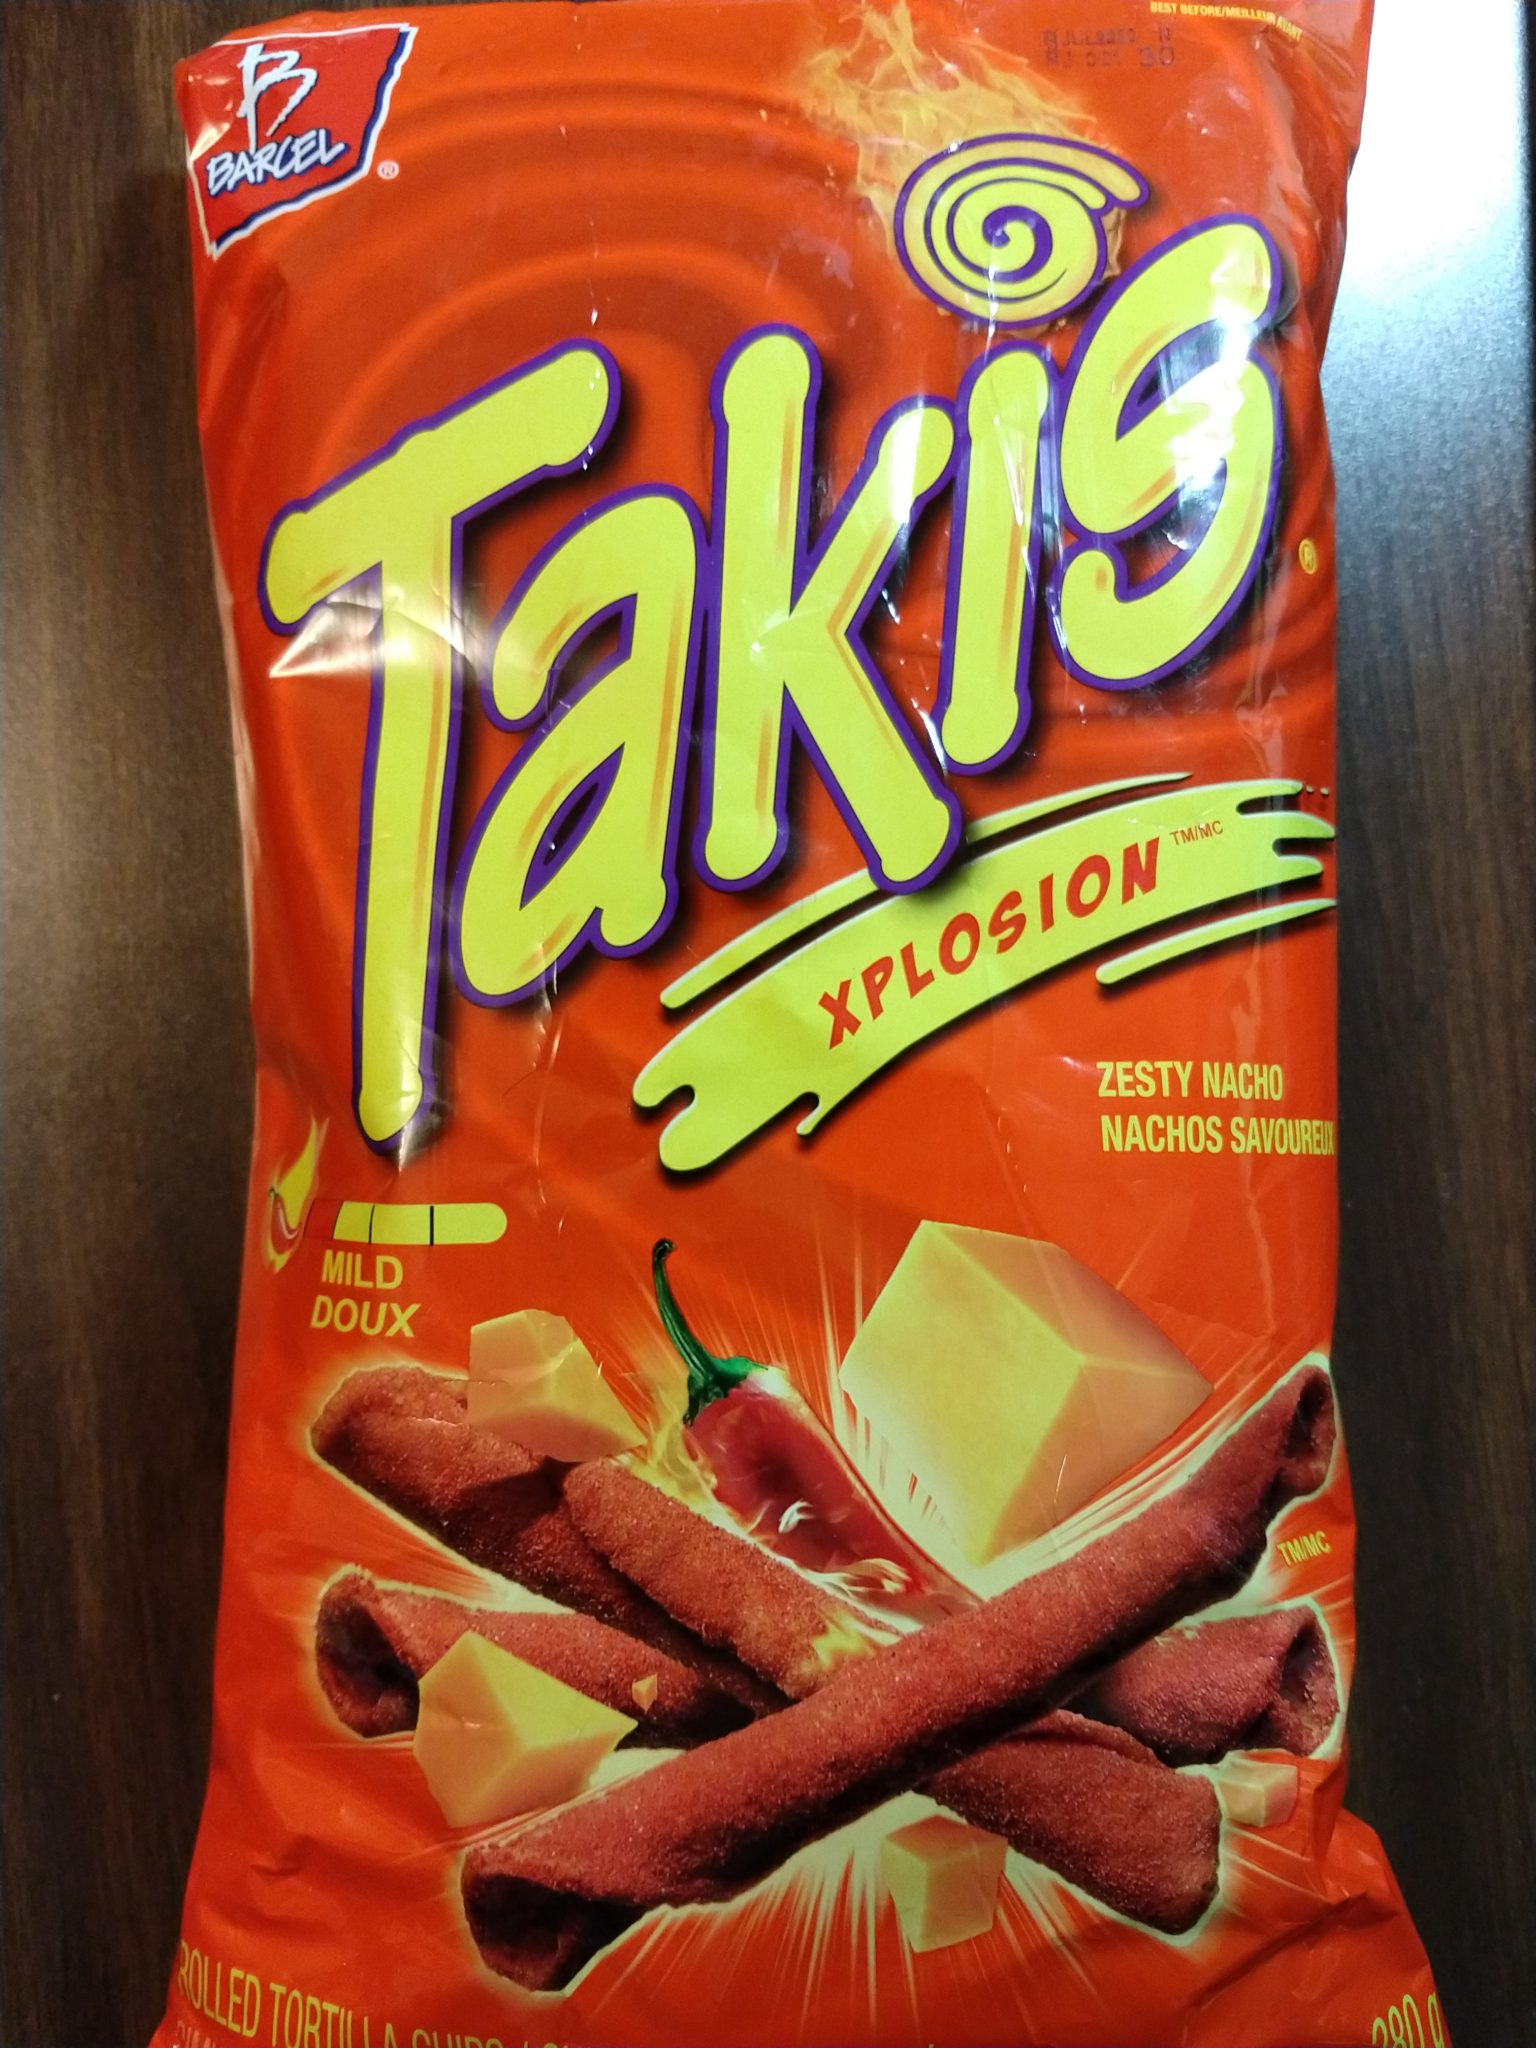 Takis – Xplosion Zesty Nacho Cheese